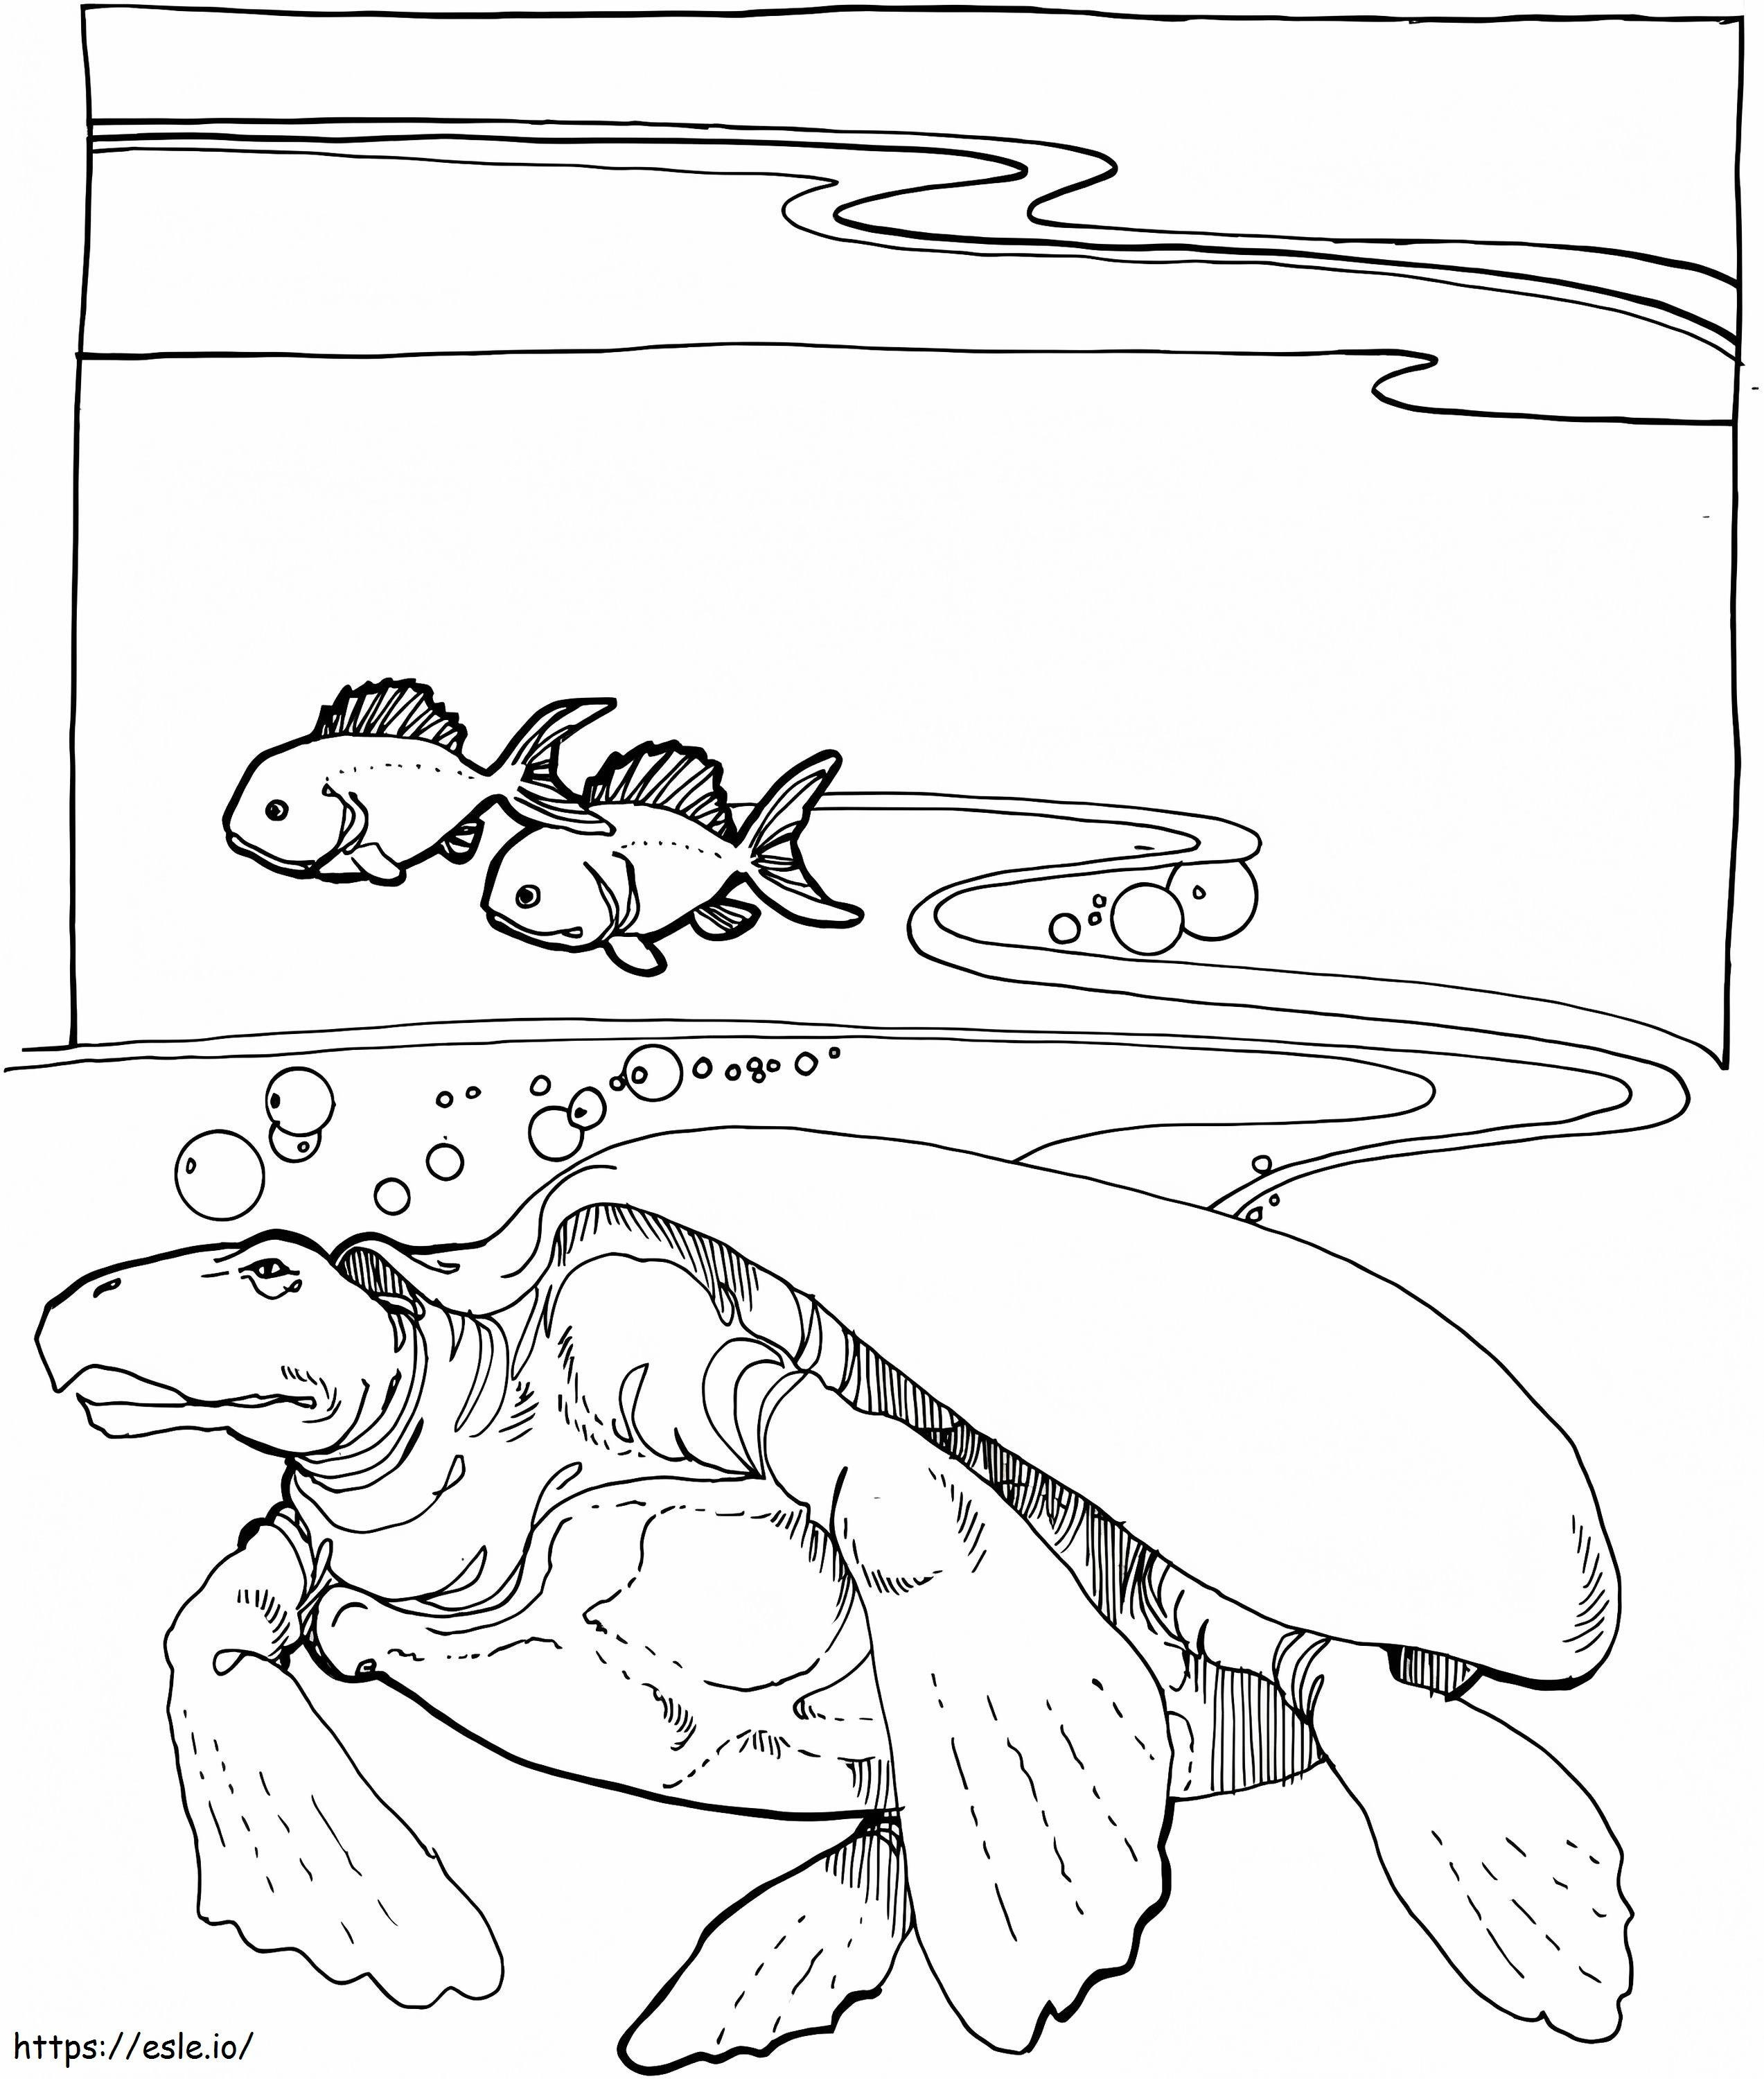 Archelon Extinct Sea Turtle coloring page